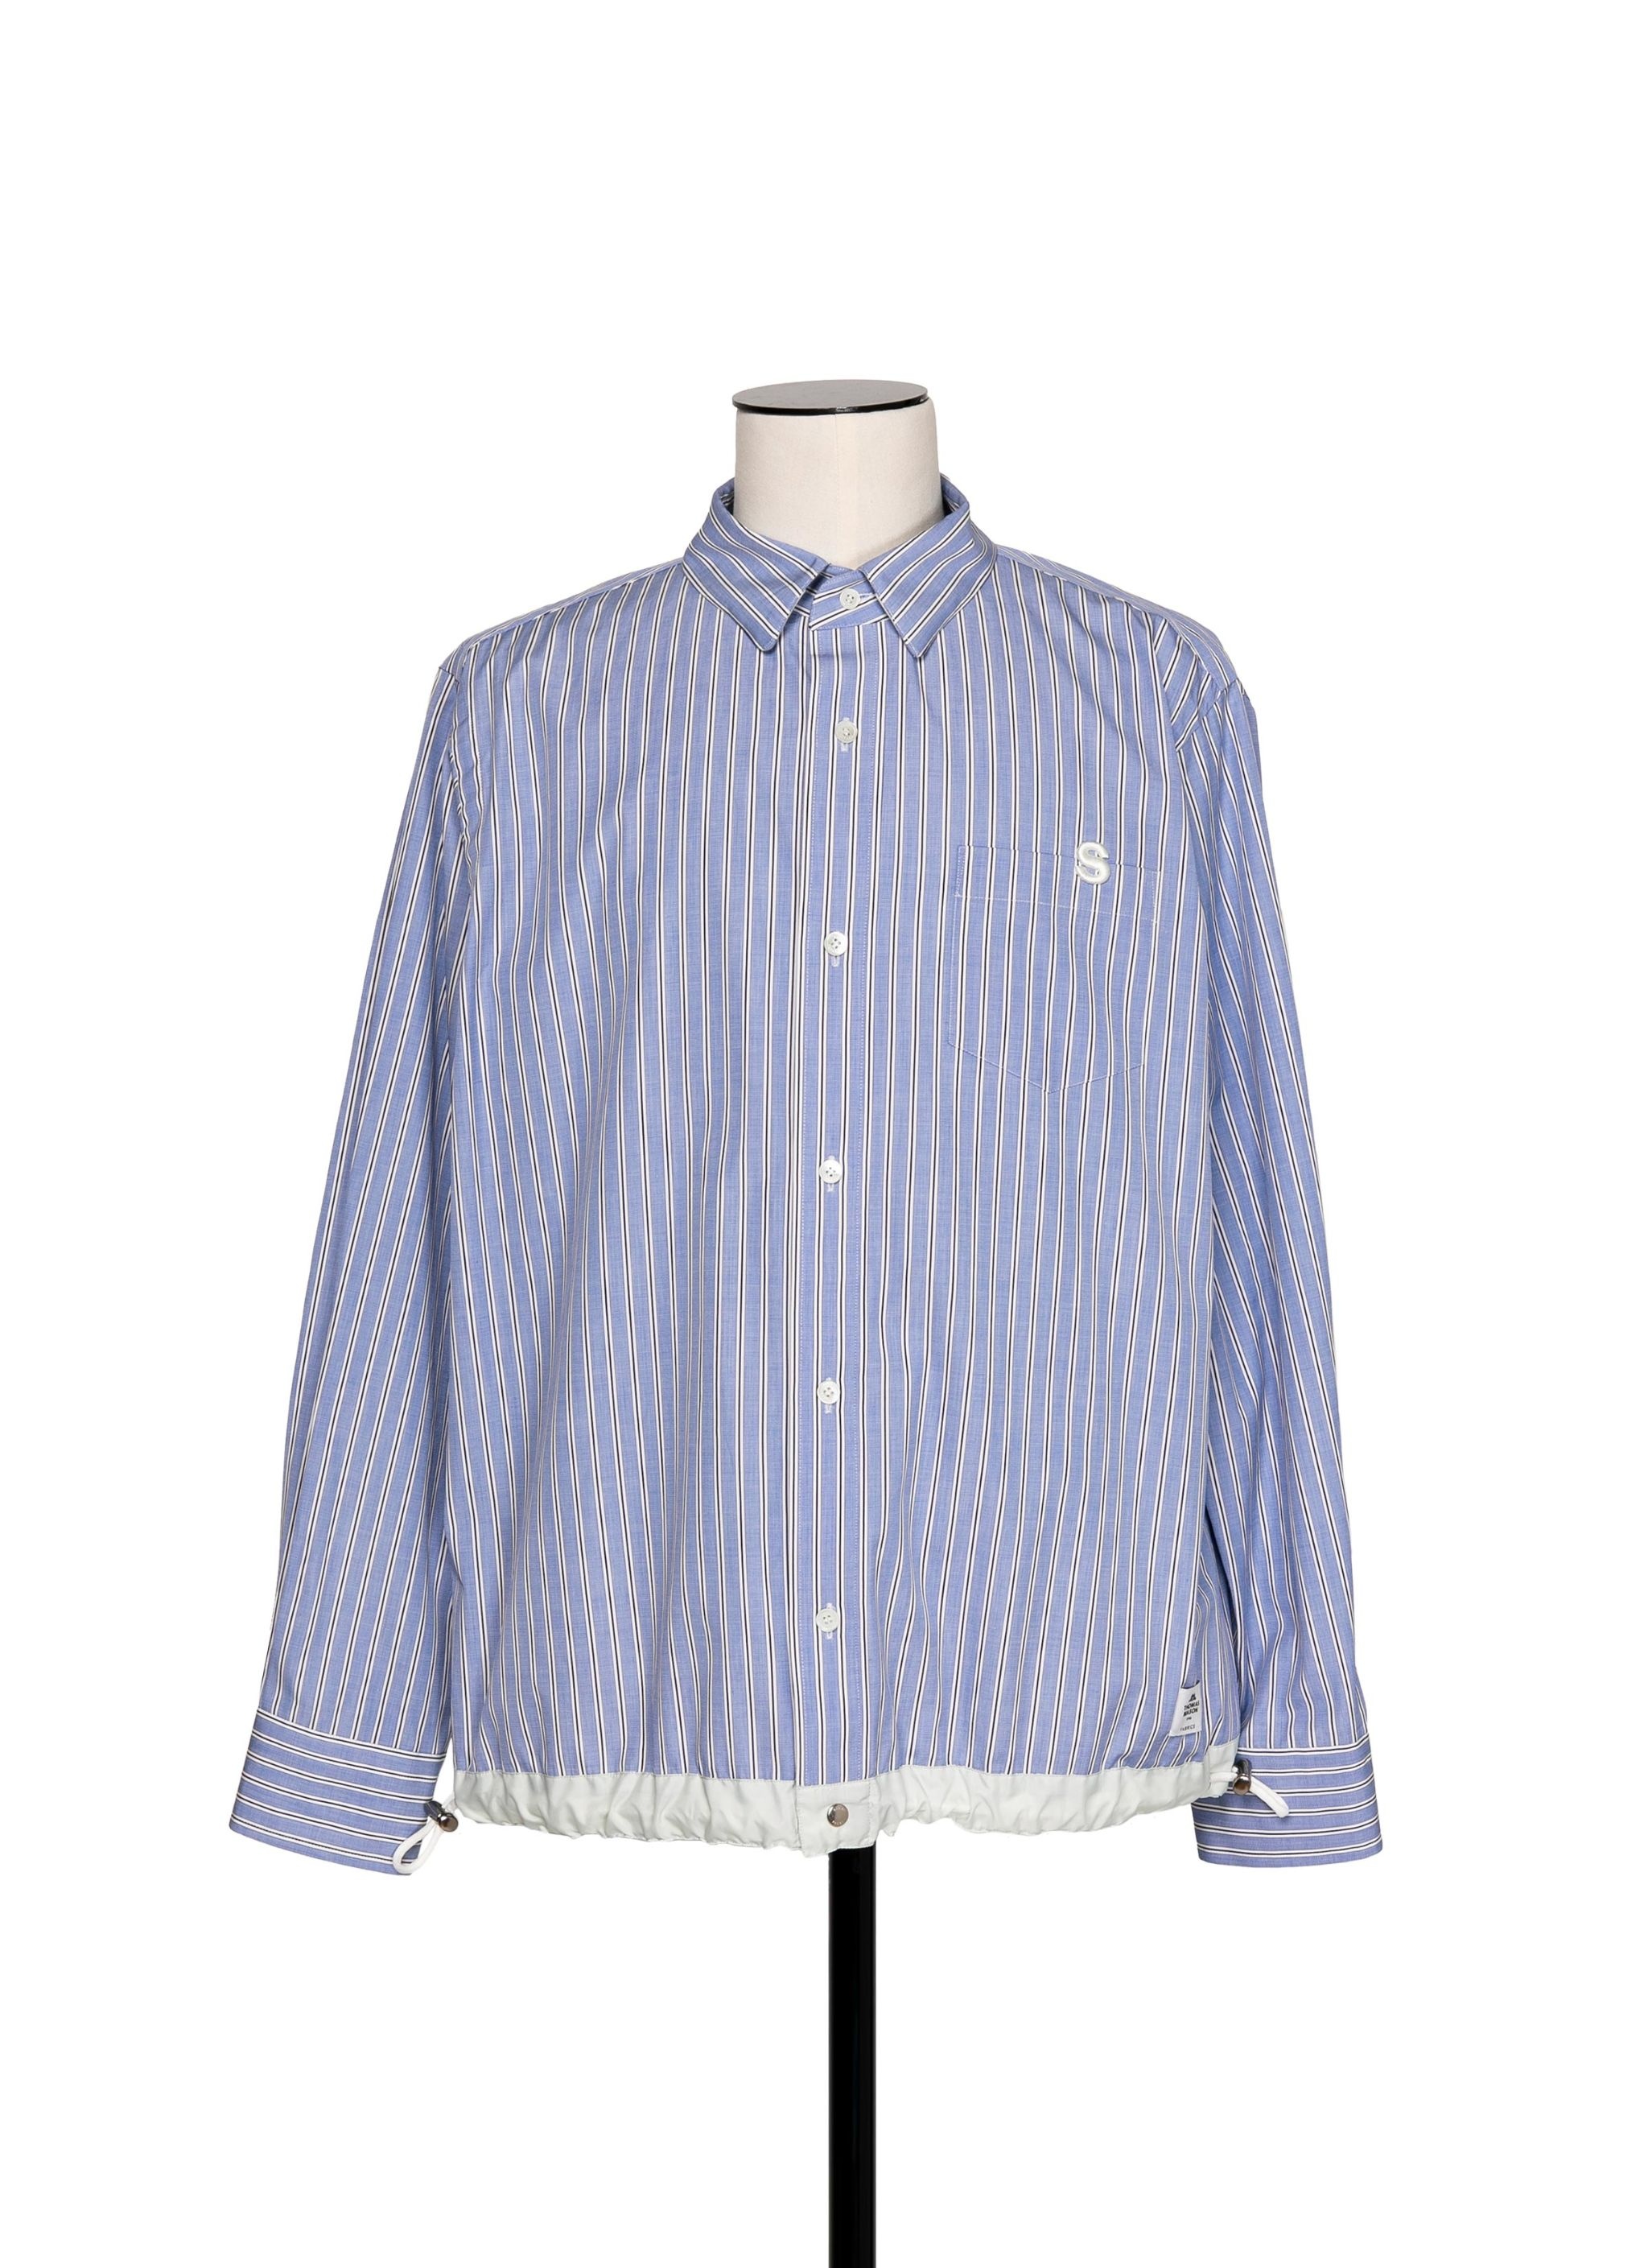 Thomas Mason s Cotton Poplin Shirt - 1